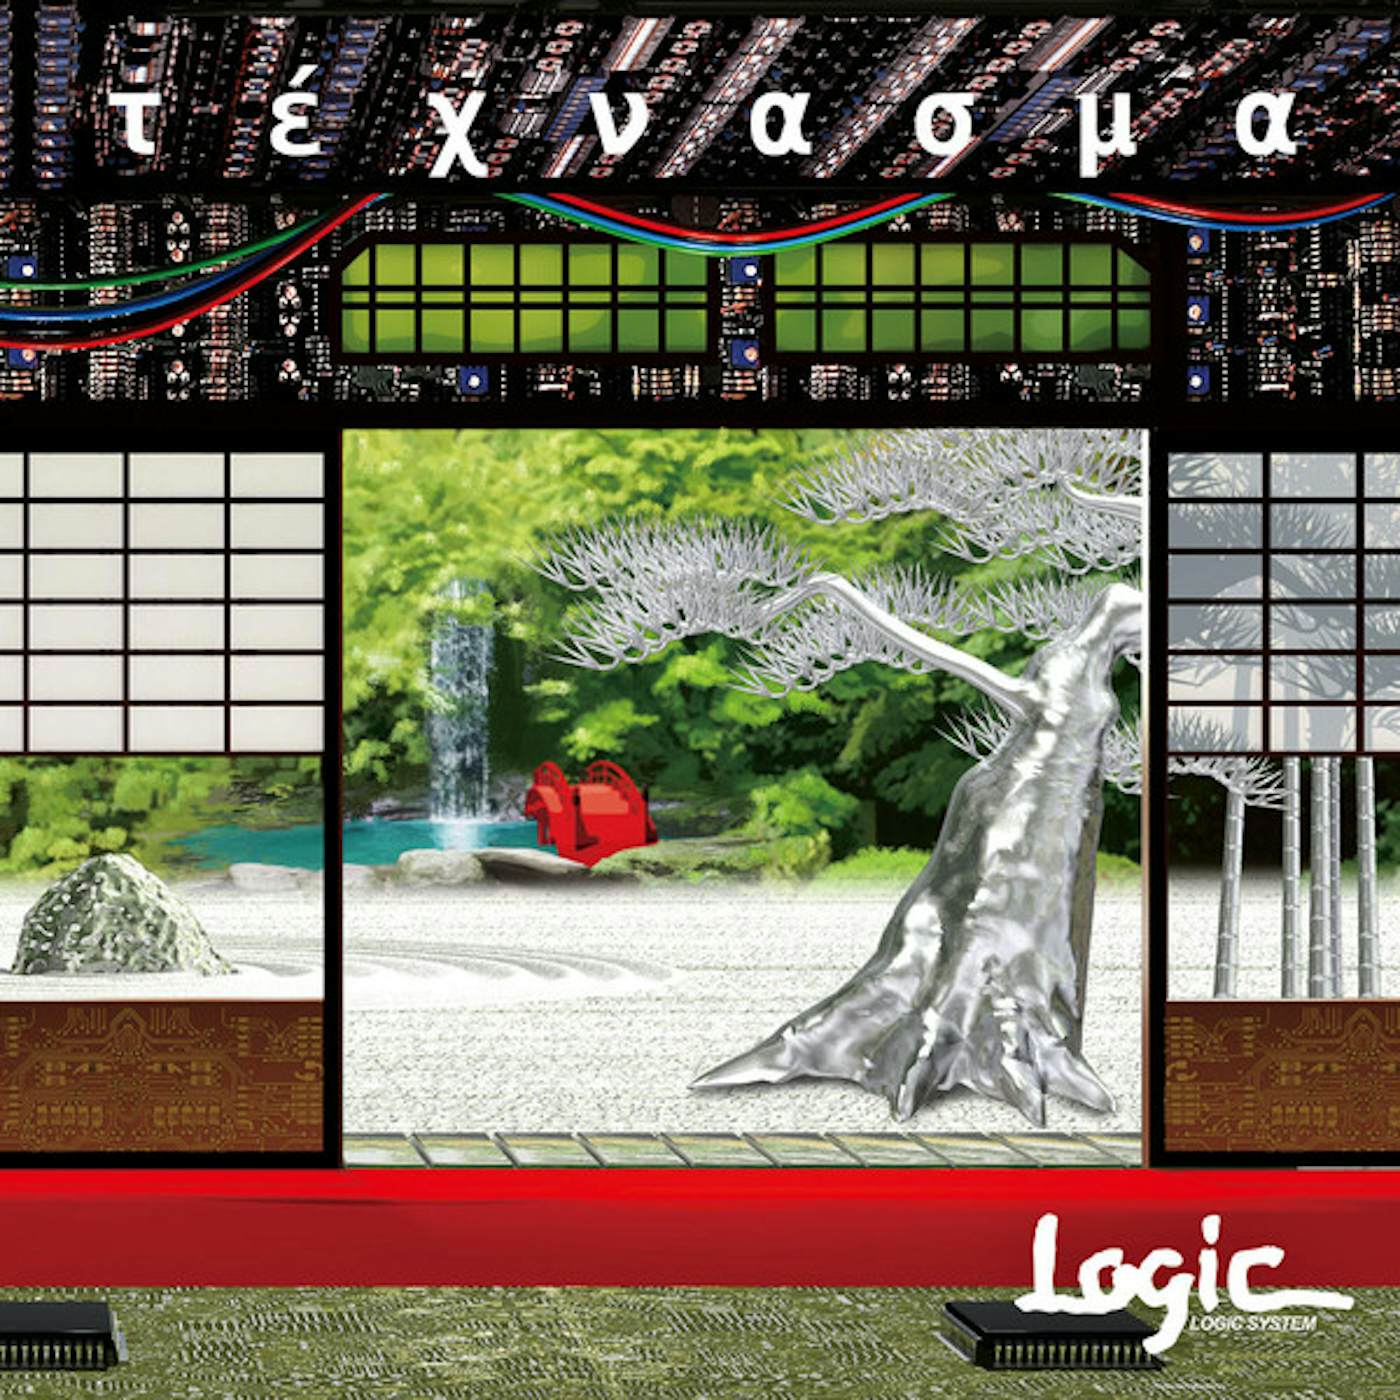 Logic System Technasma Vinyl Record